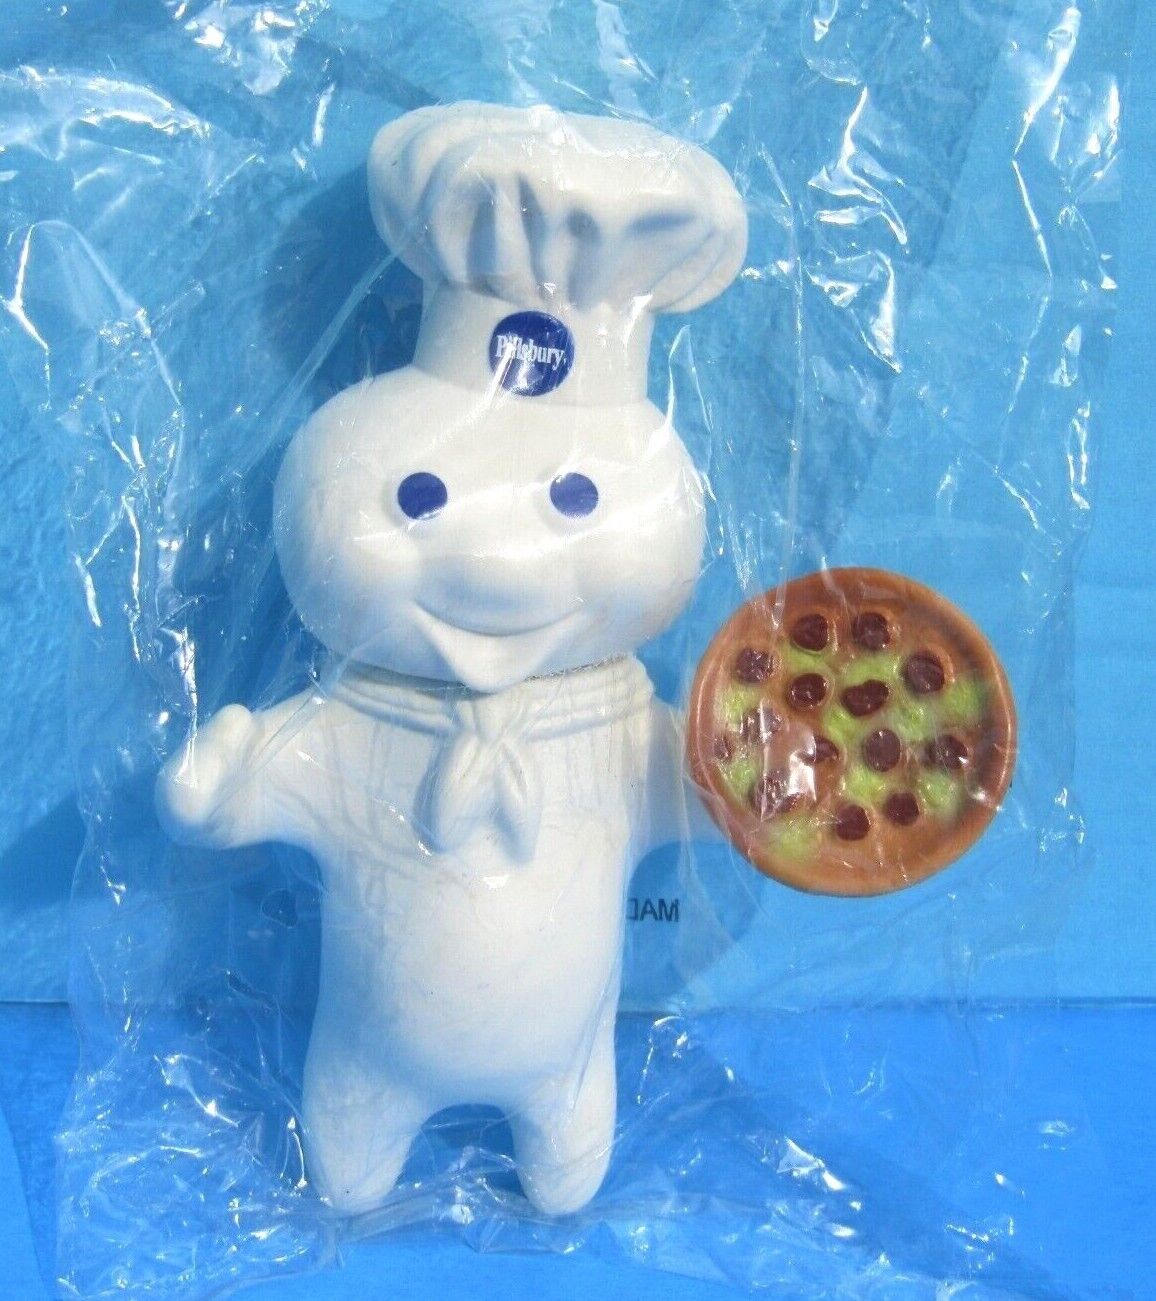 FS NIP Pillsbury Doughboy PIZZA DOLL POPPIN FRESH SOFT VINYL CHARACTER SEALED